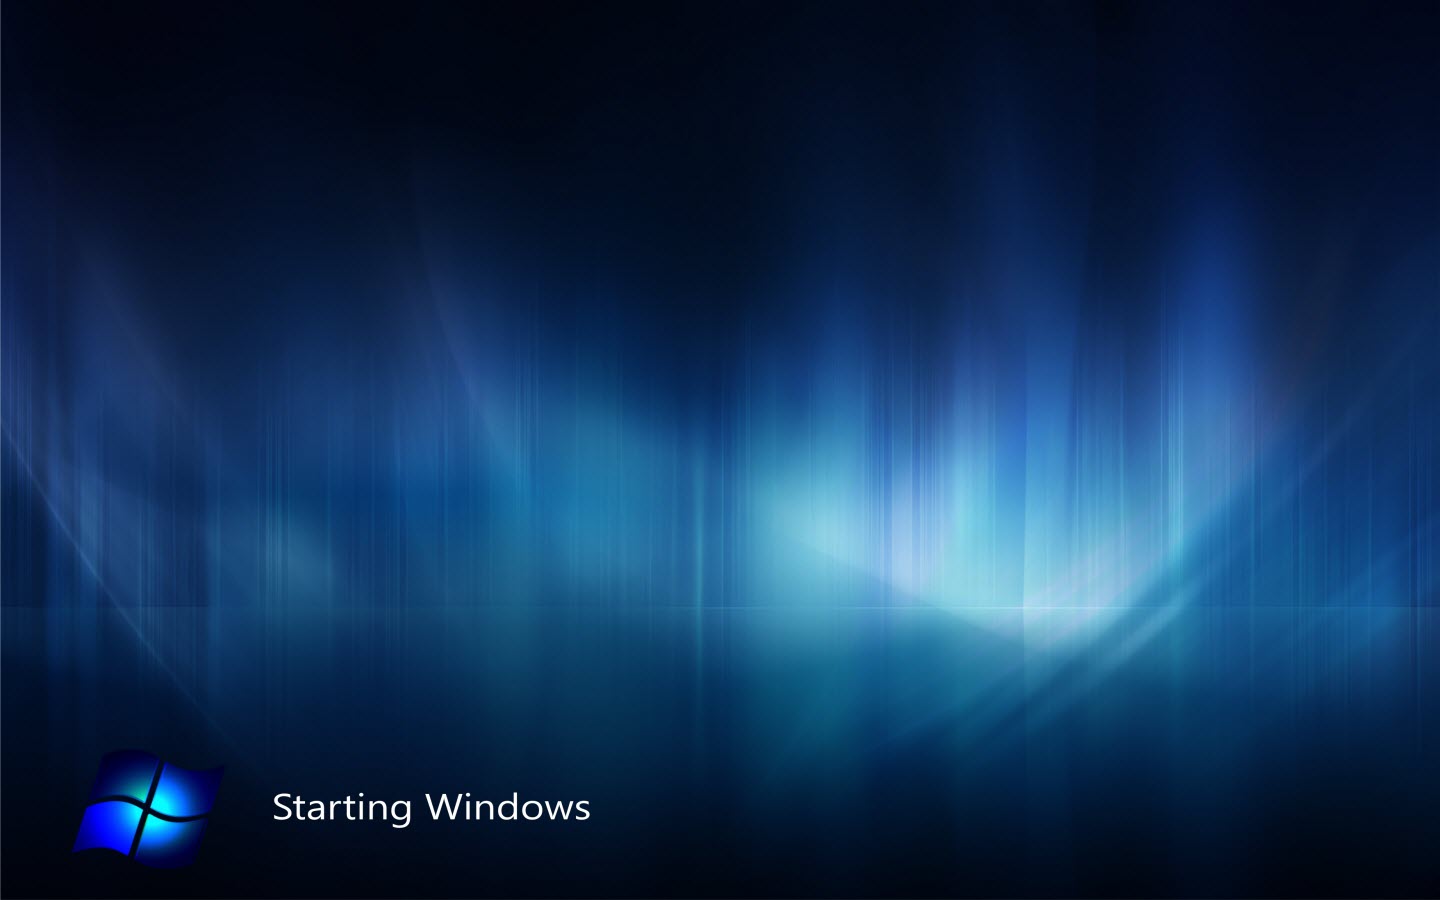 Windows 8 Wallpaper Hd